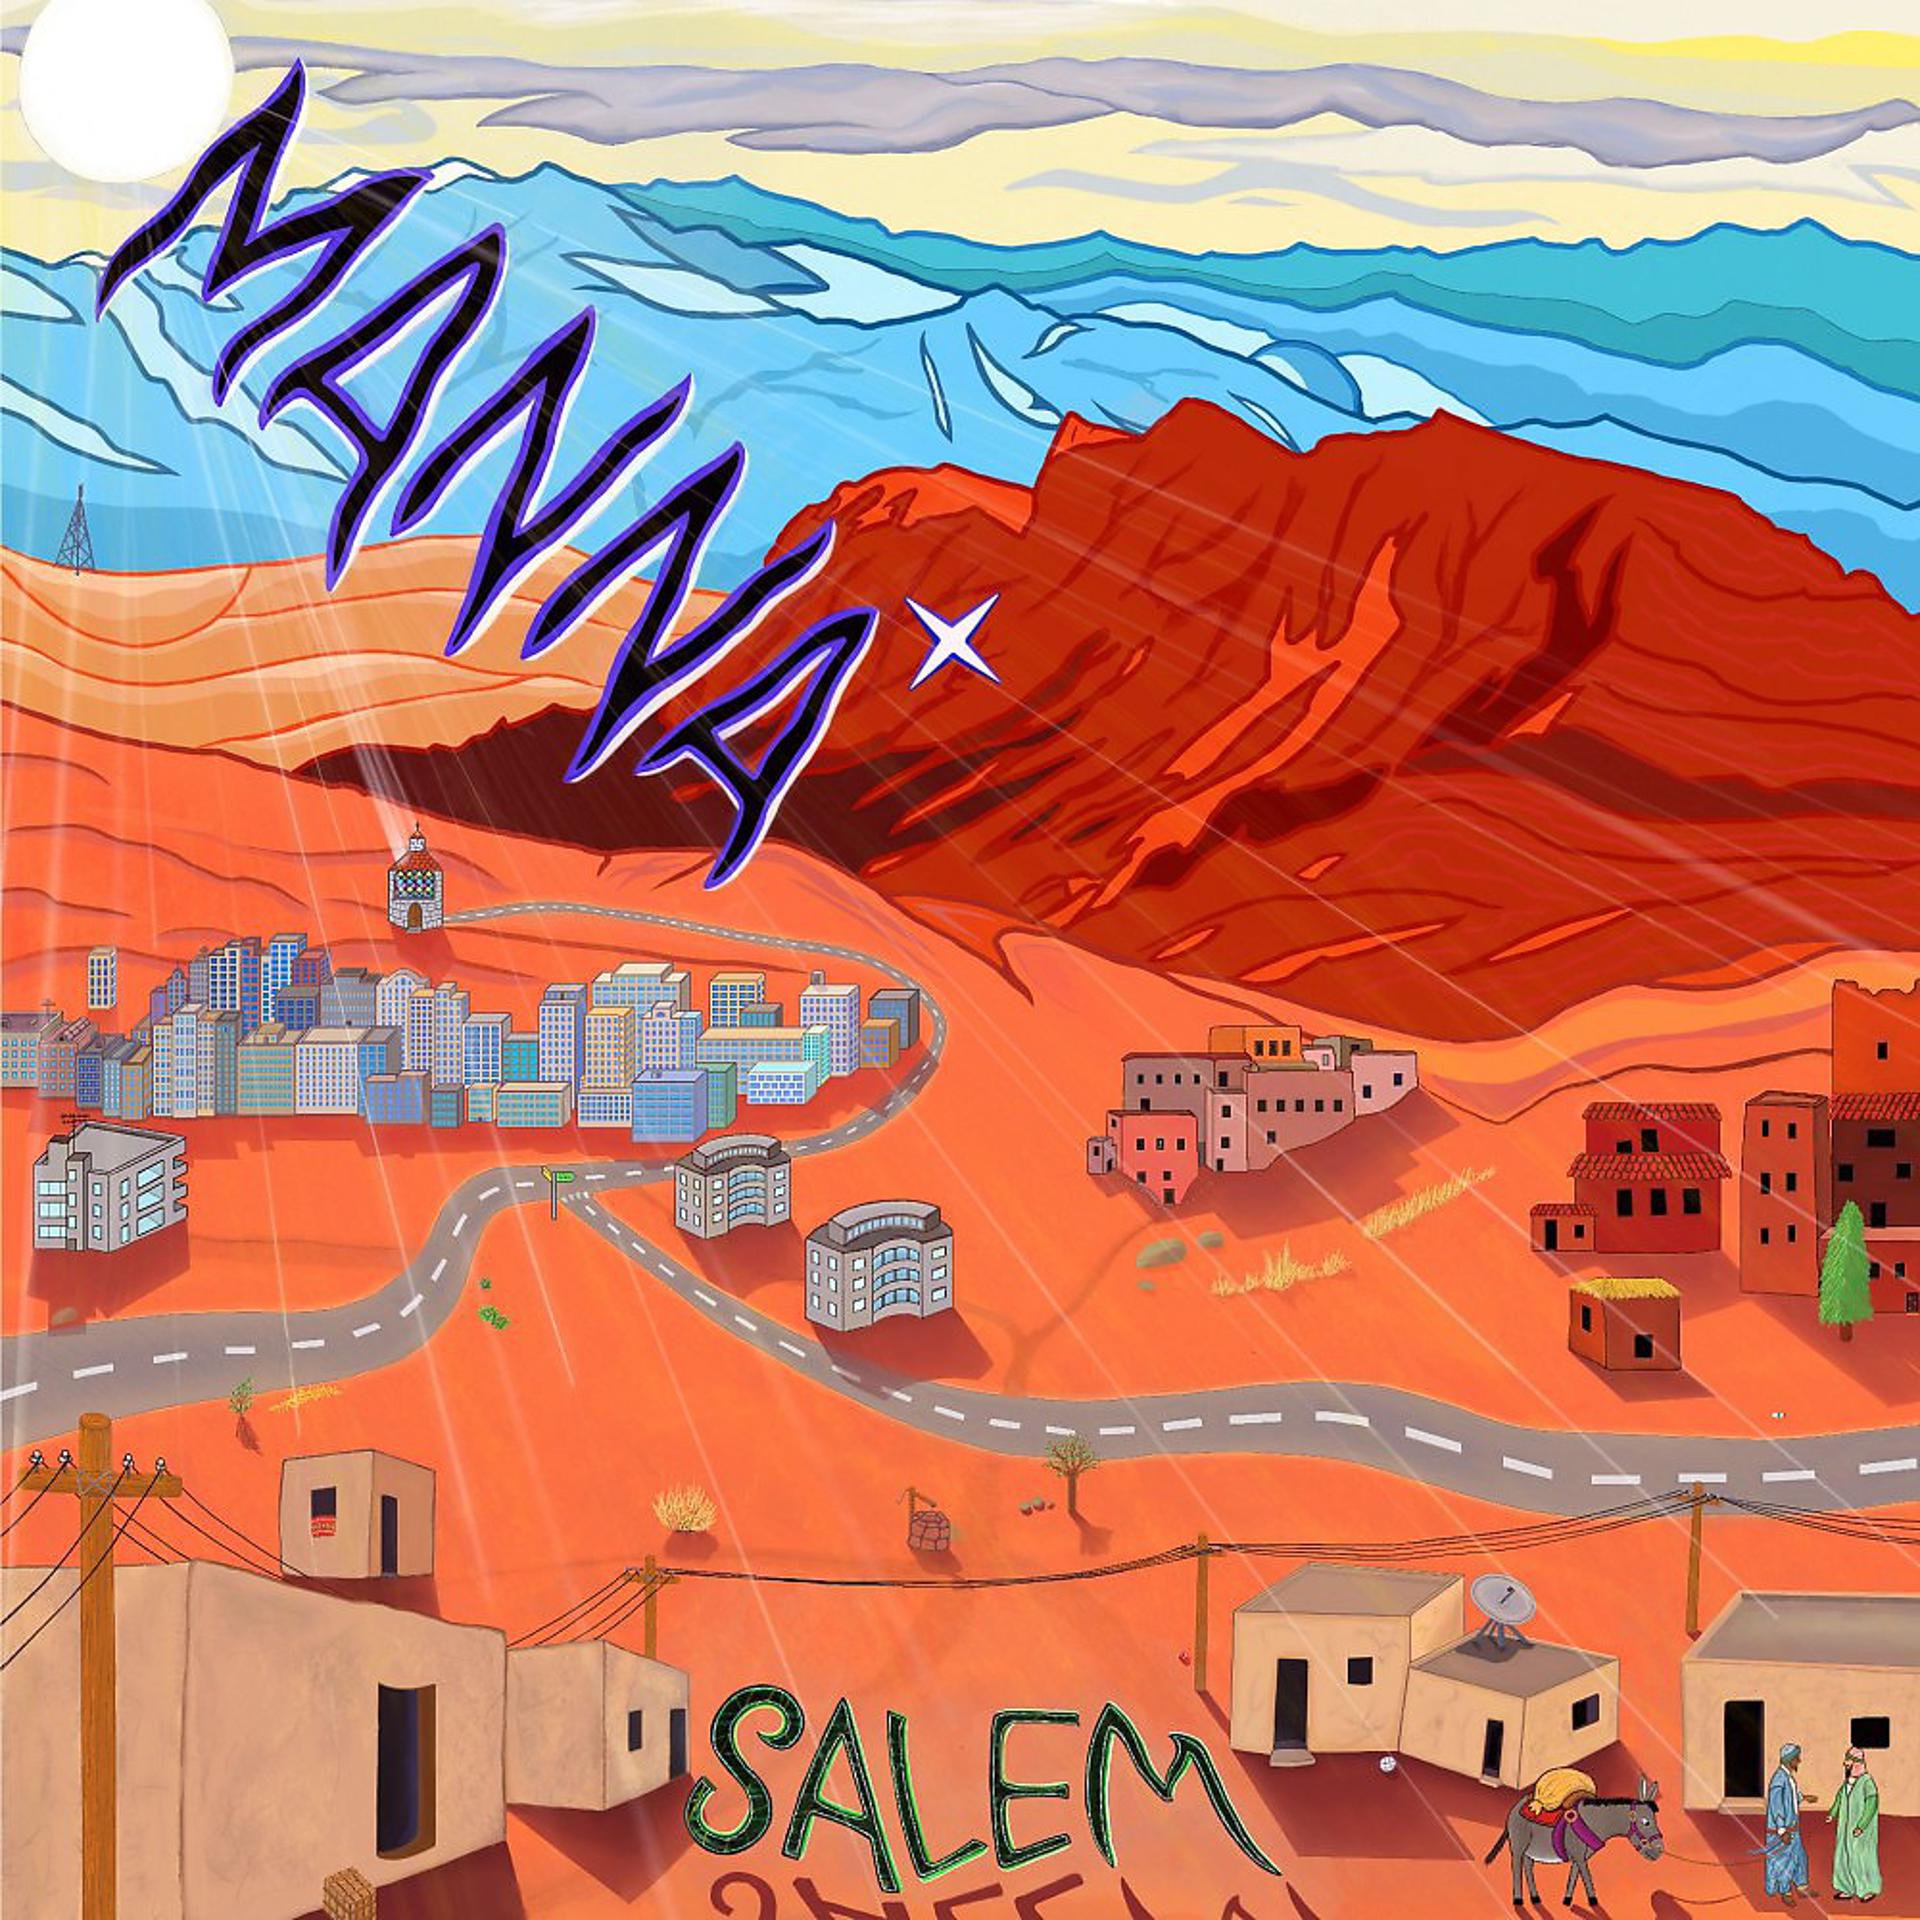 Постер альбома Manna